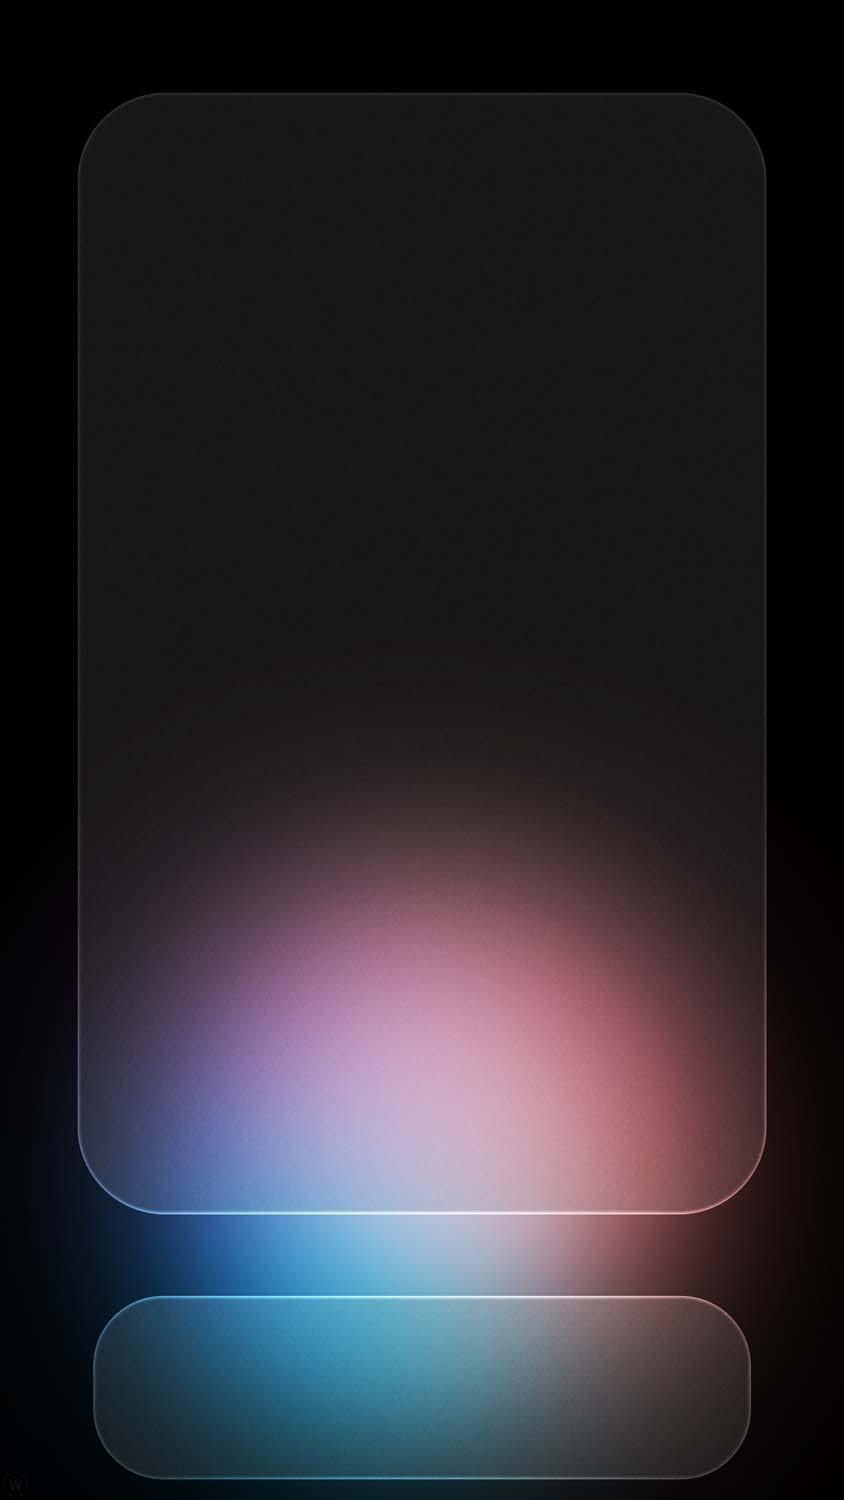 IOS App Dock Minimal Gradient IPhone Wallpaper HD  IPhone Wallpapers